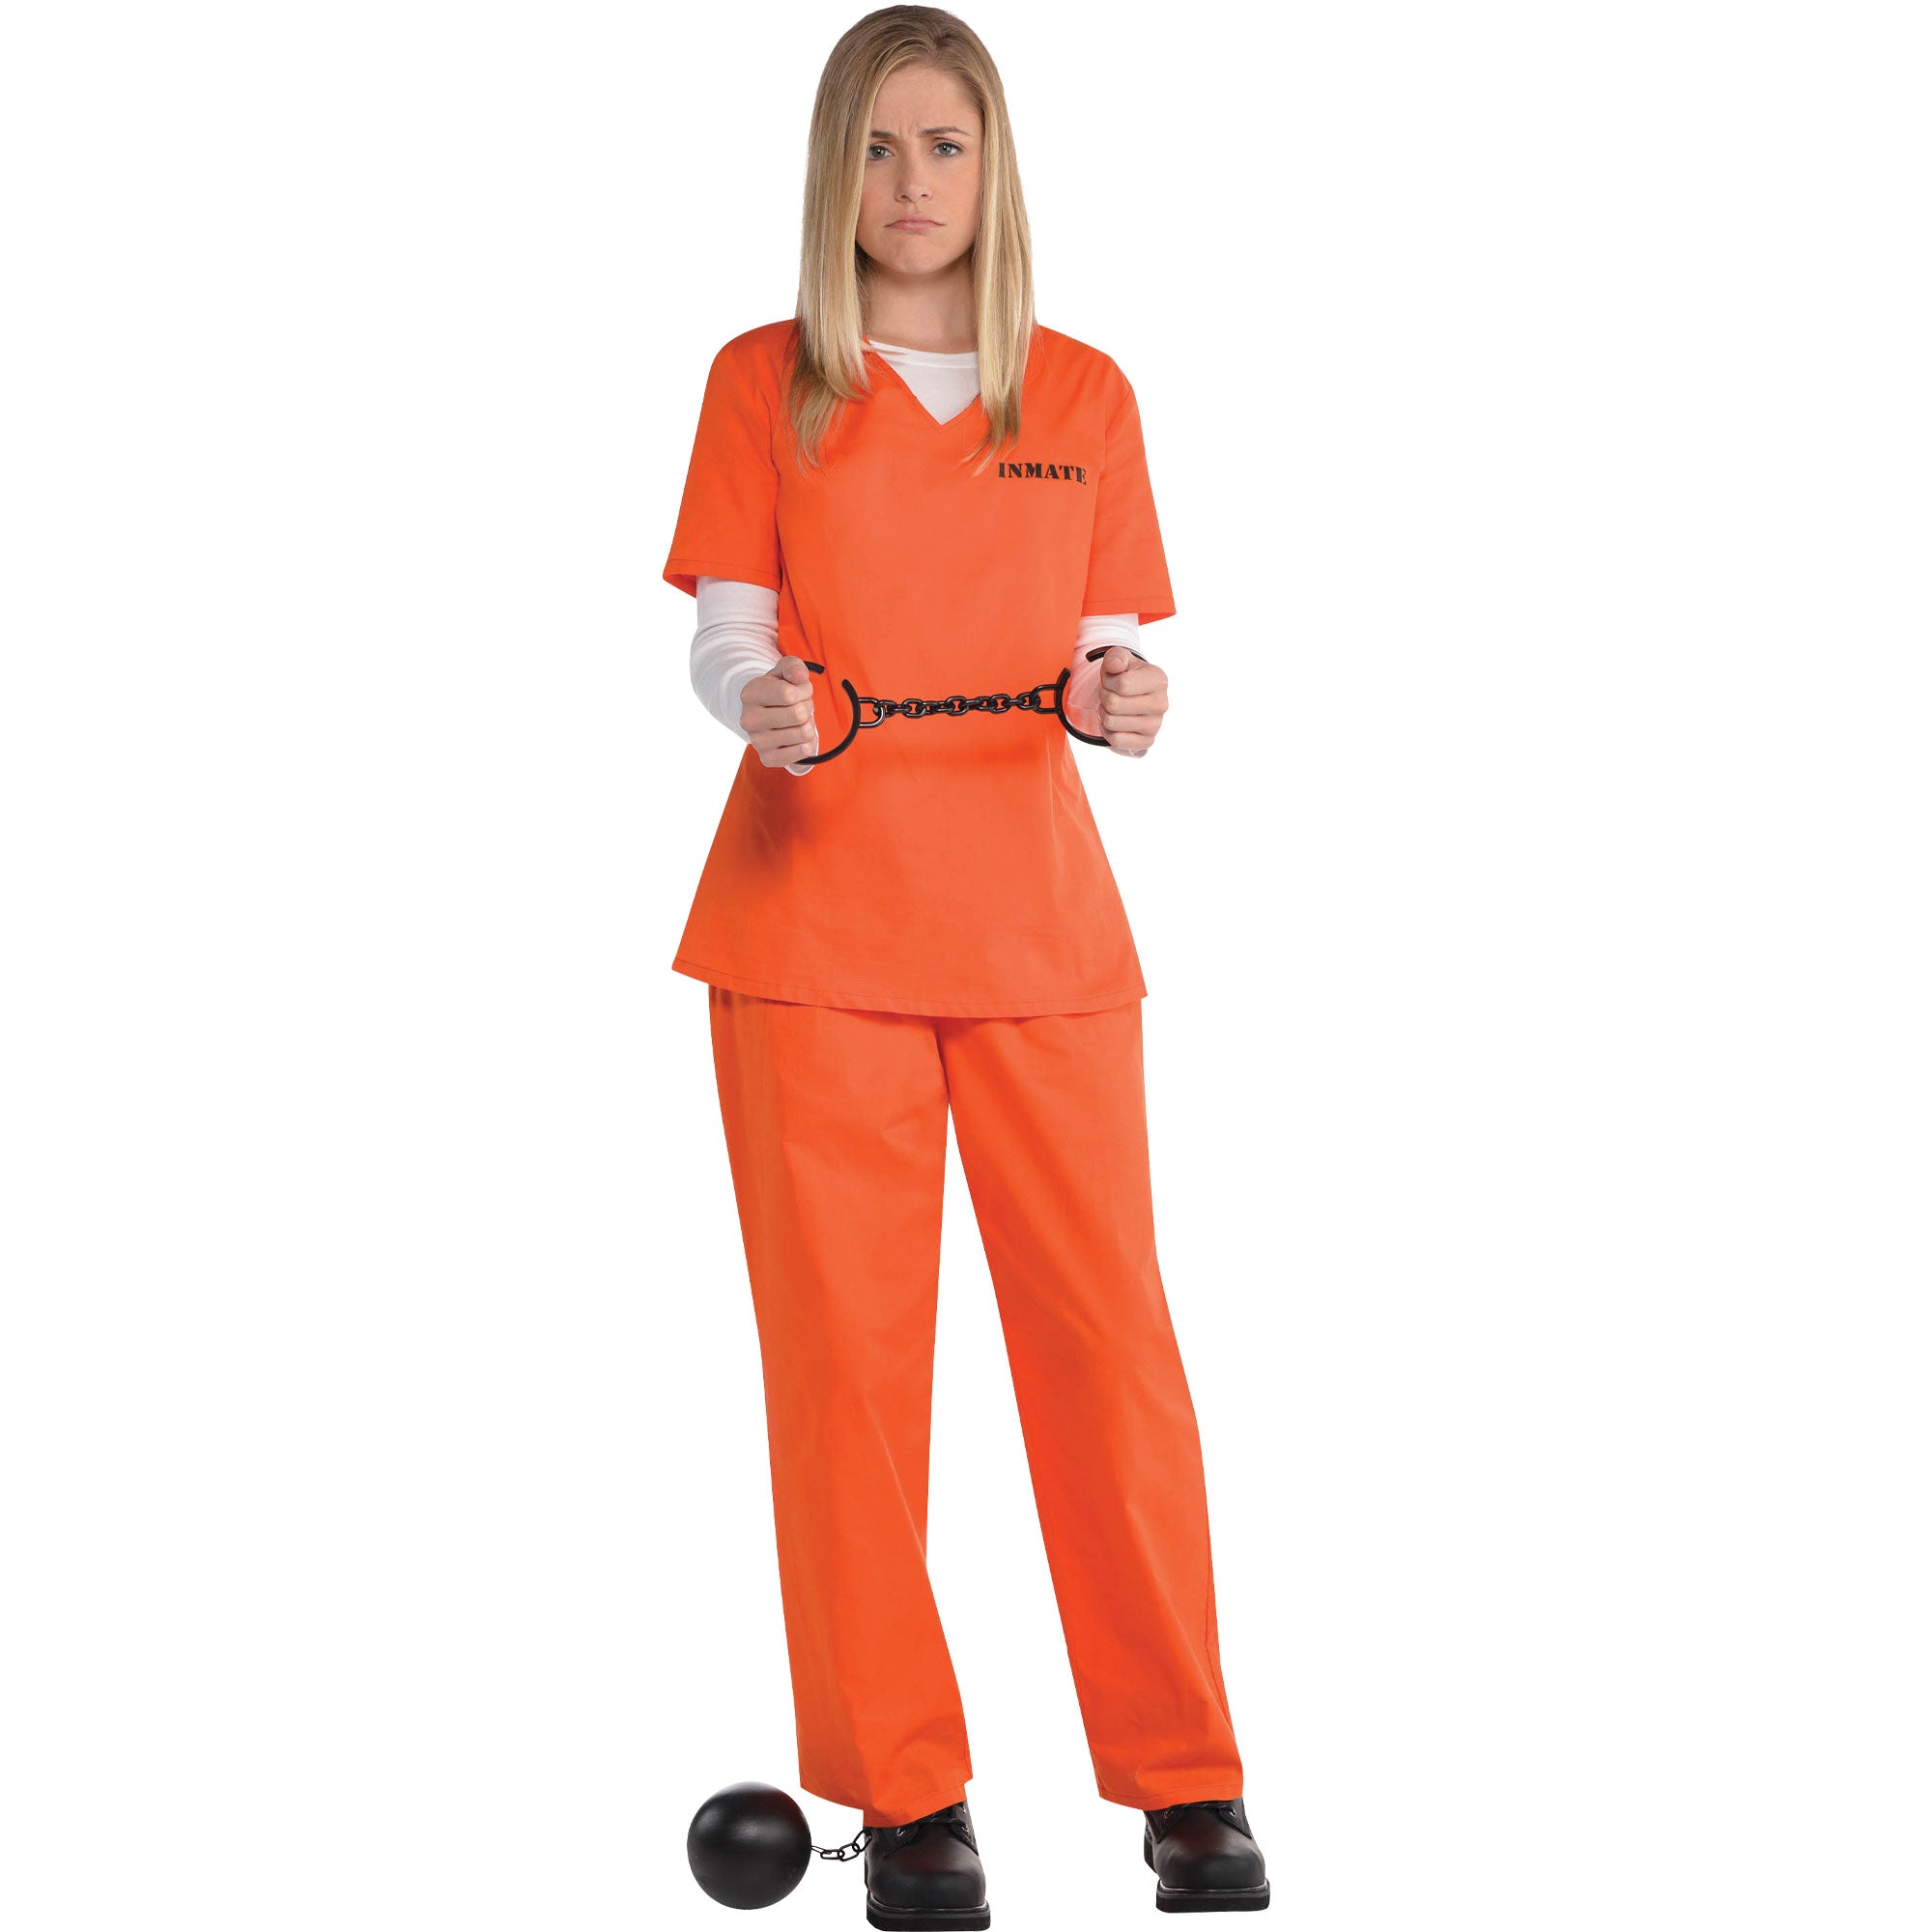 Costume Orange Inmate Women's Size 18-20